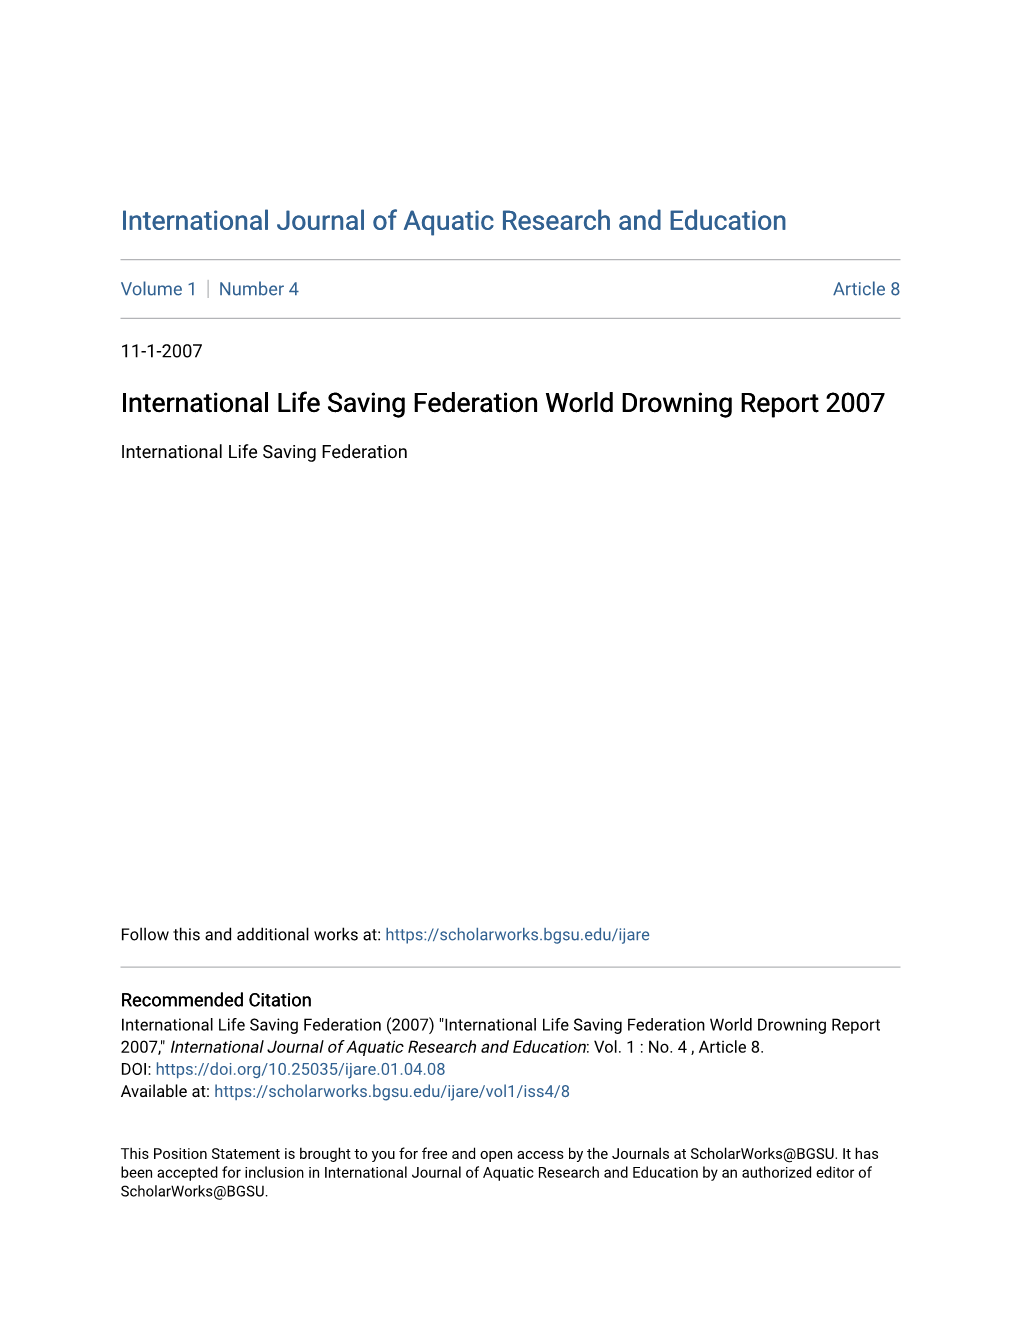 International Life Saving Federation World Drowning Report 2007